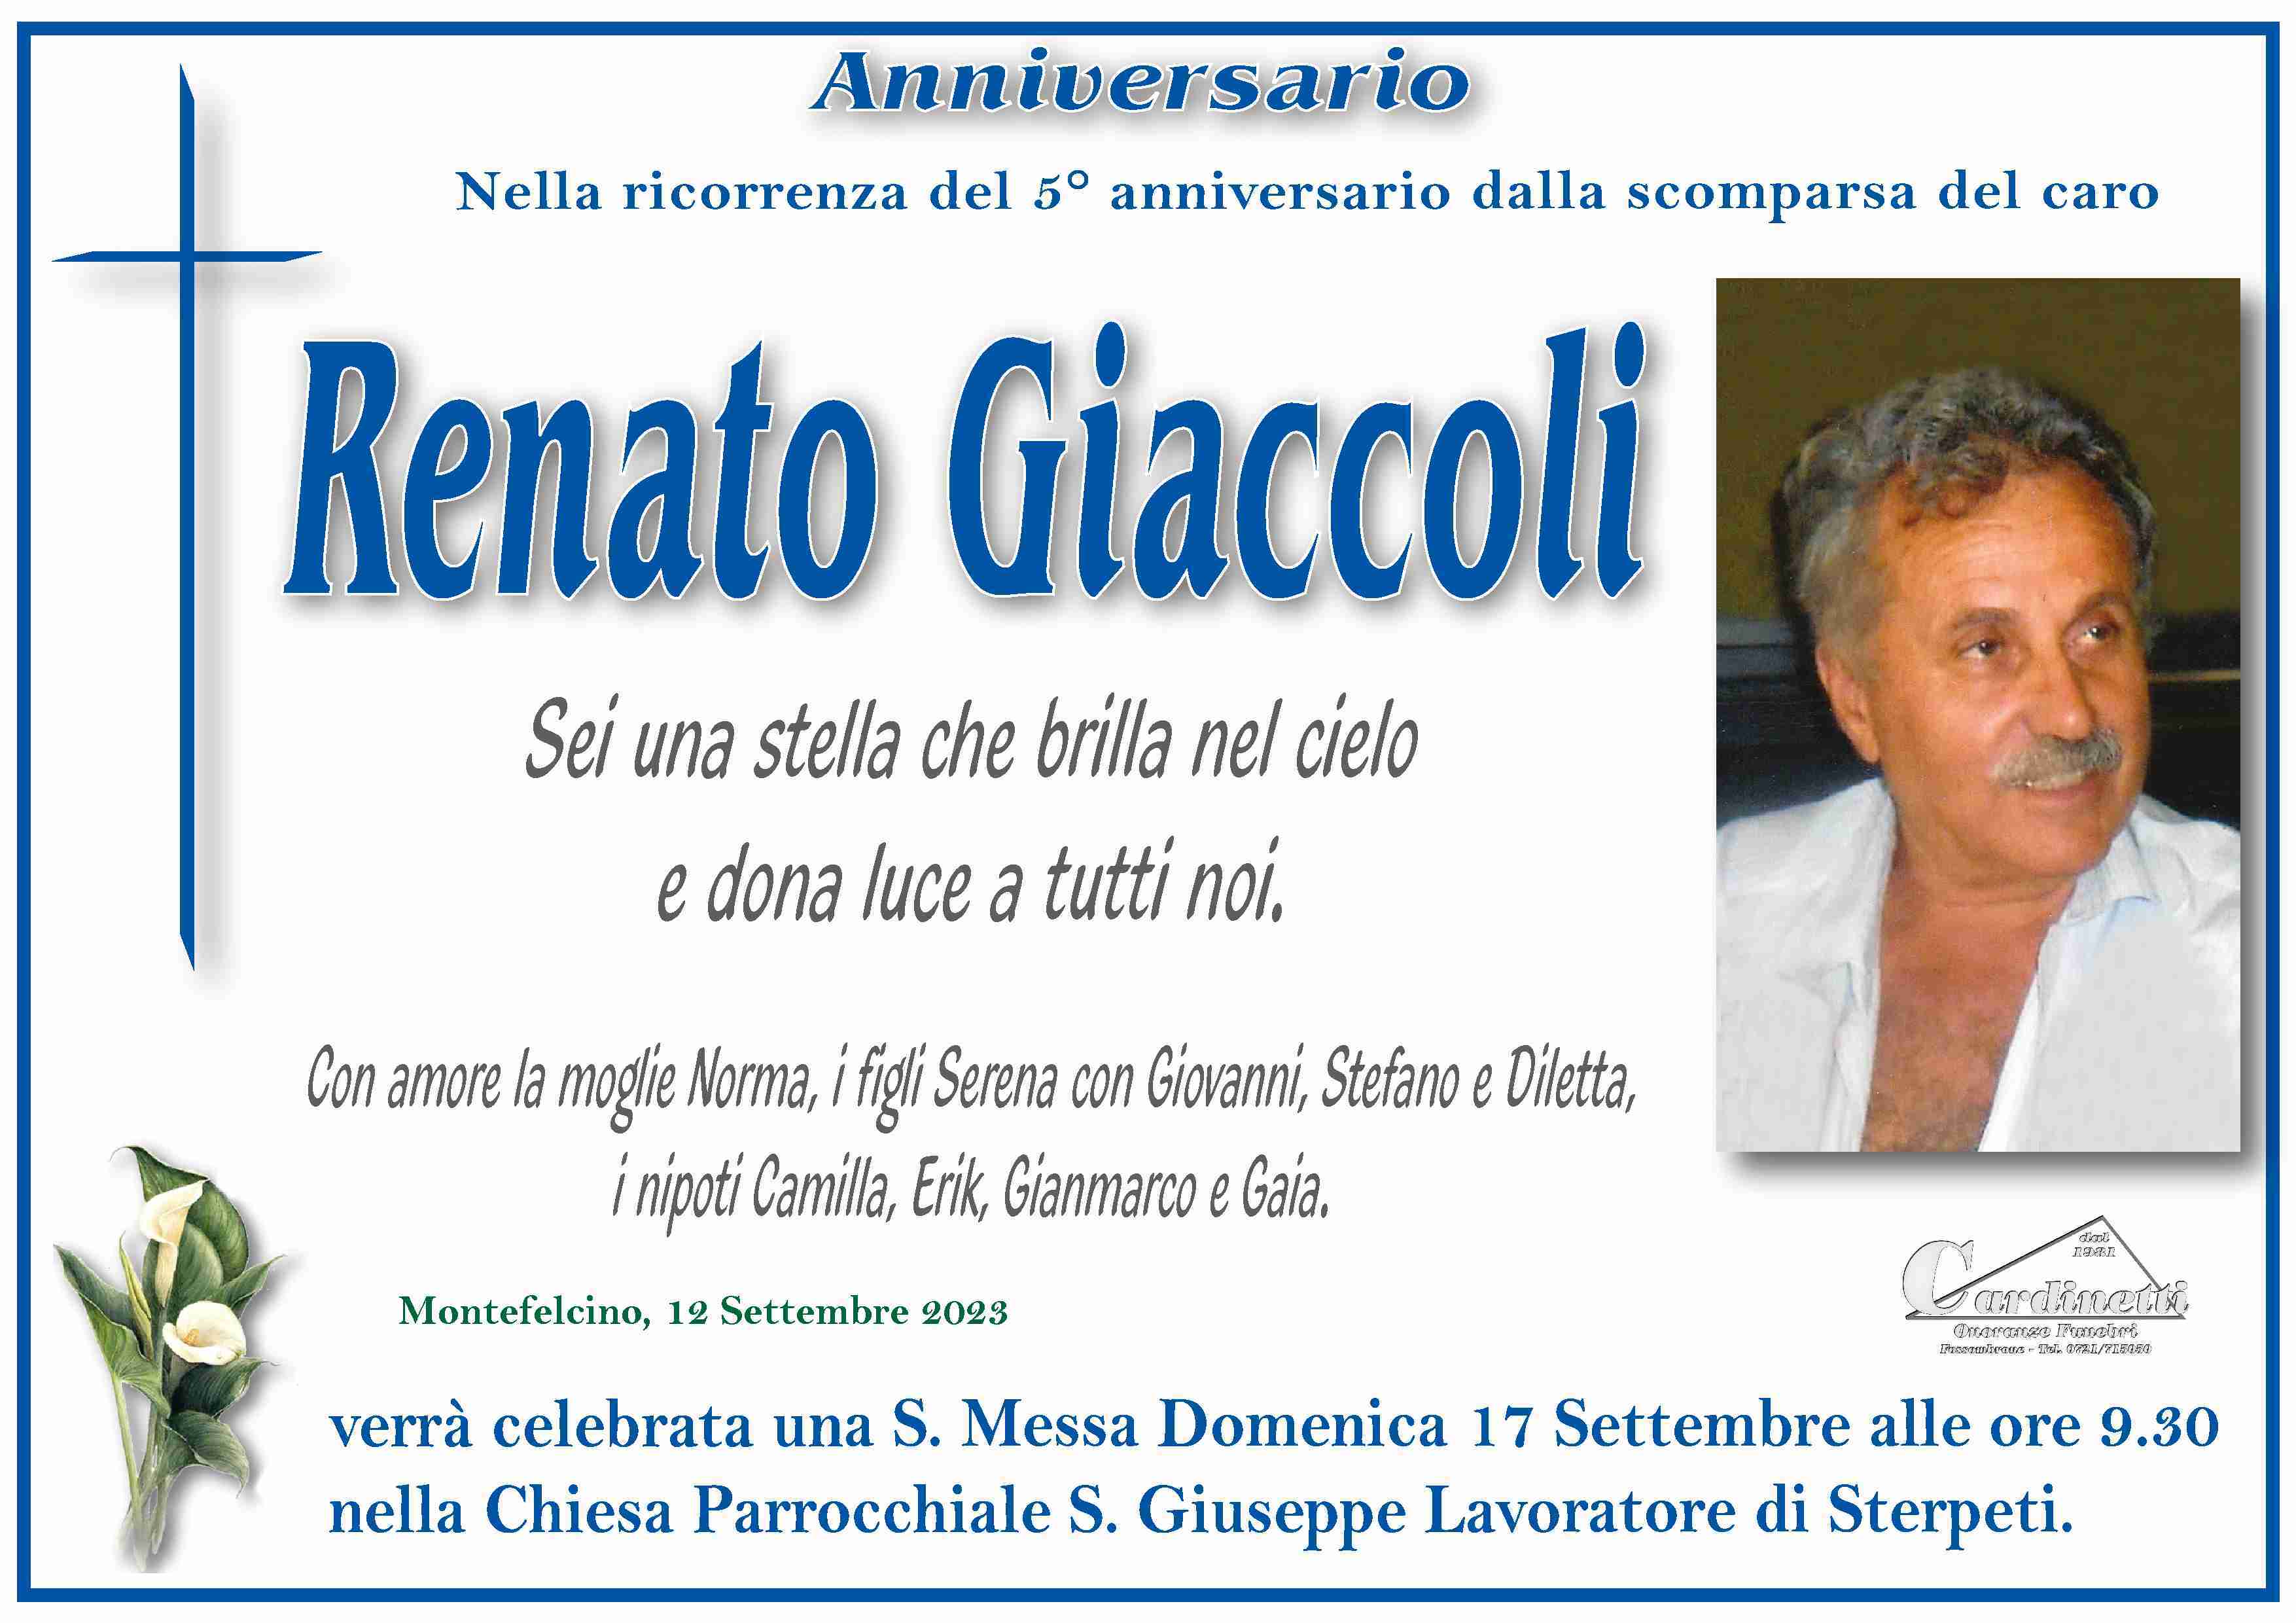 Renato Giaccoli